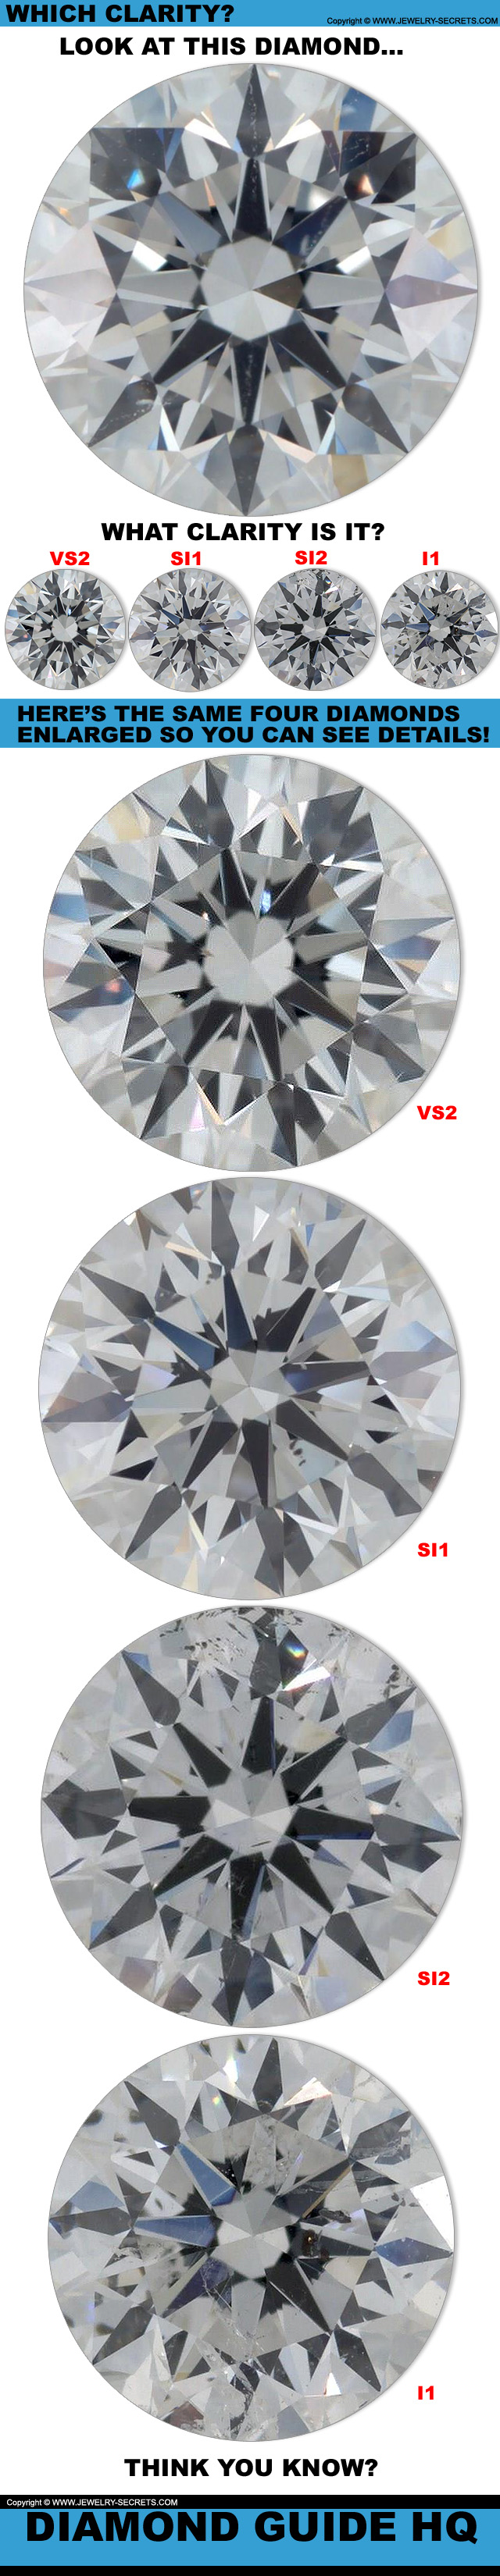 What Diamond Clarity is this Diamond?